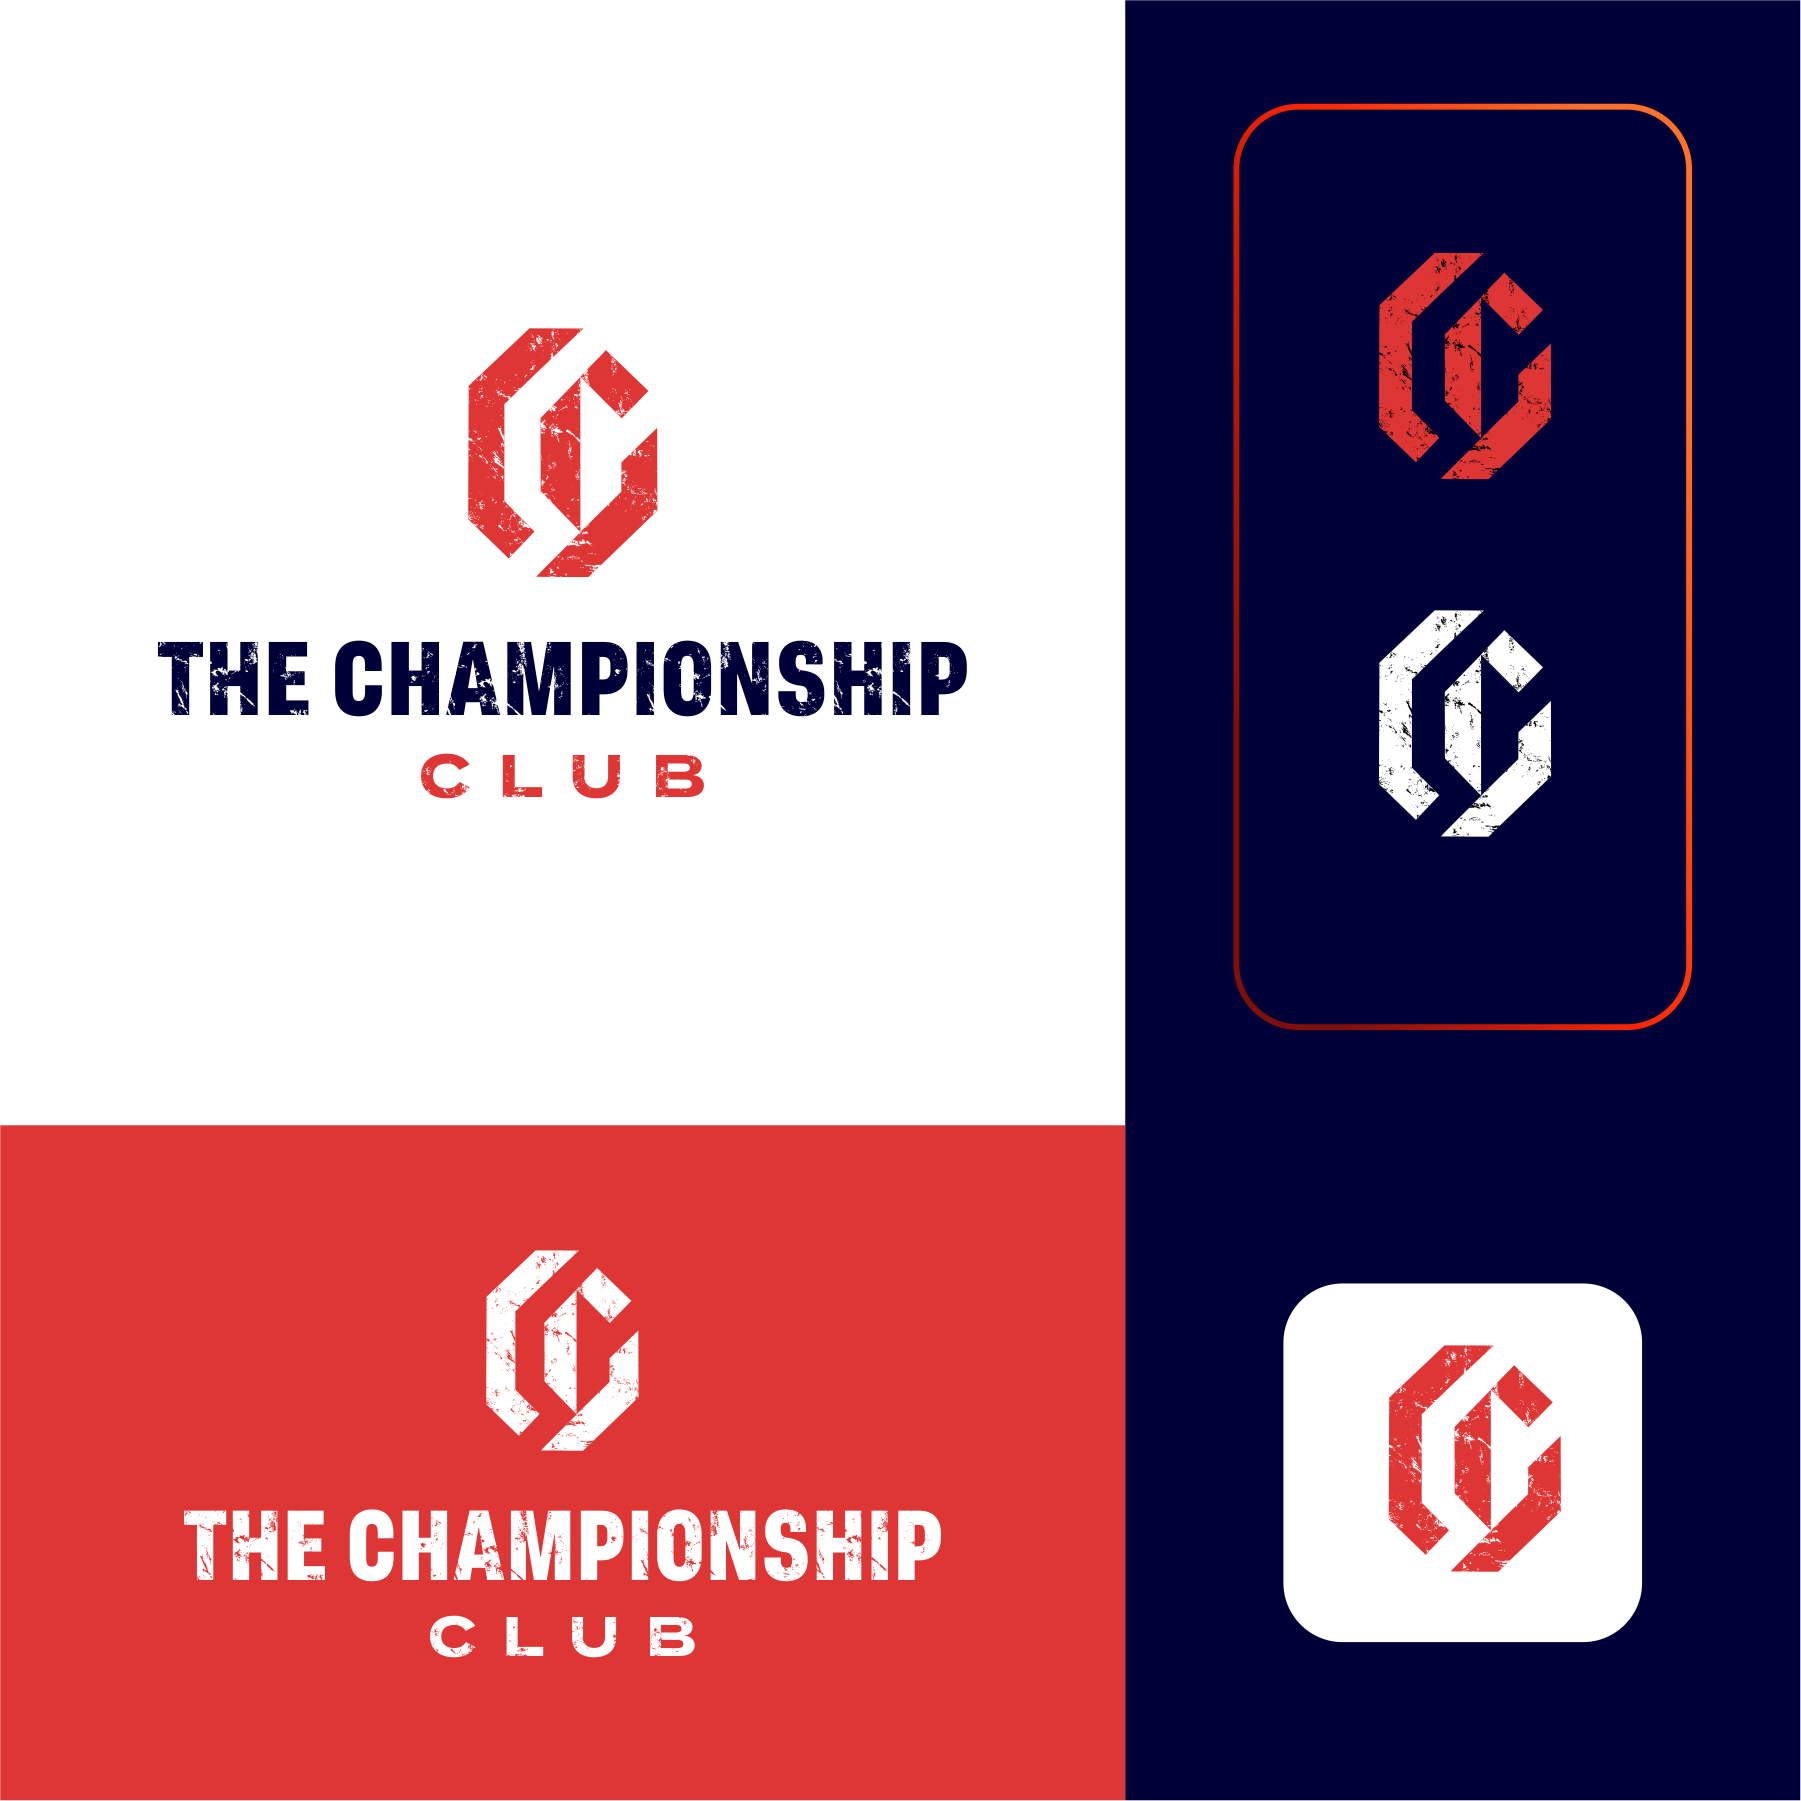 The Championship Club